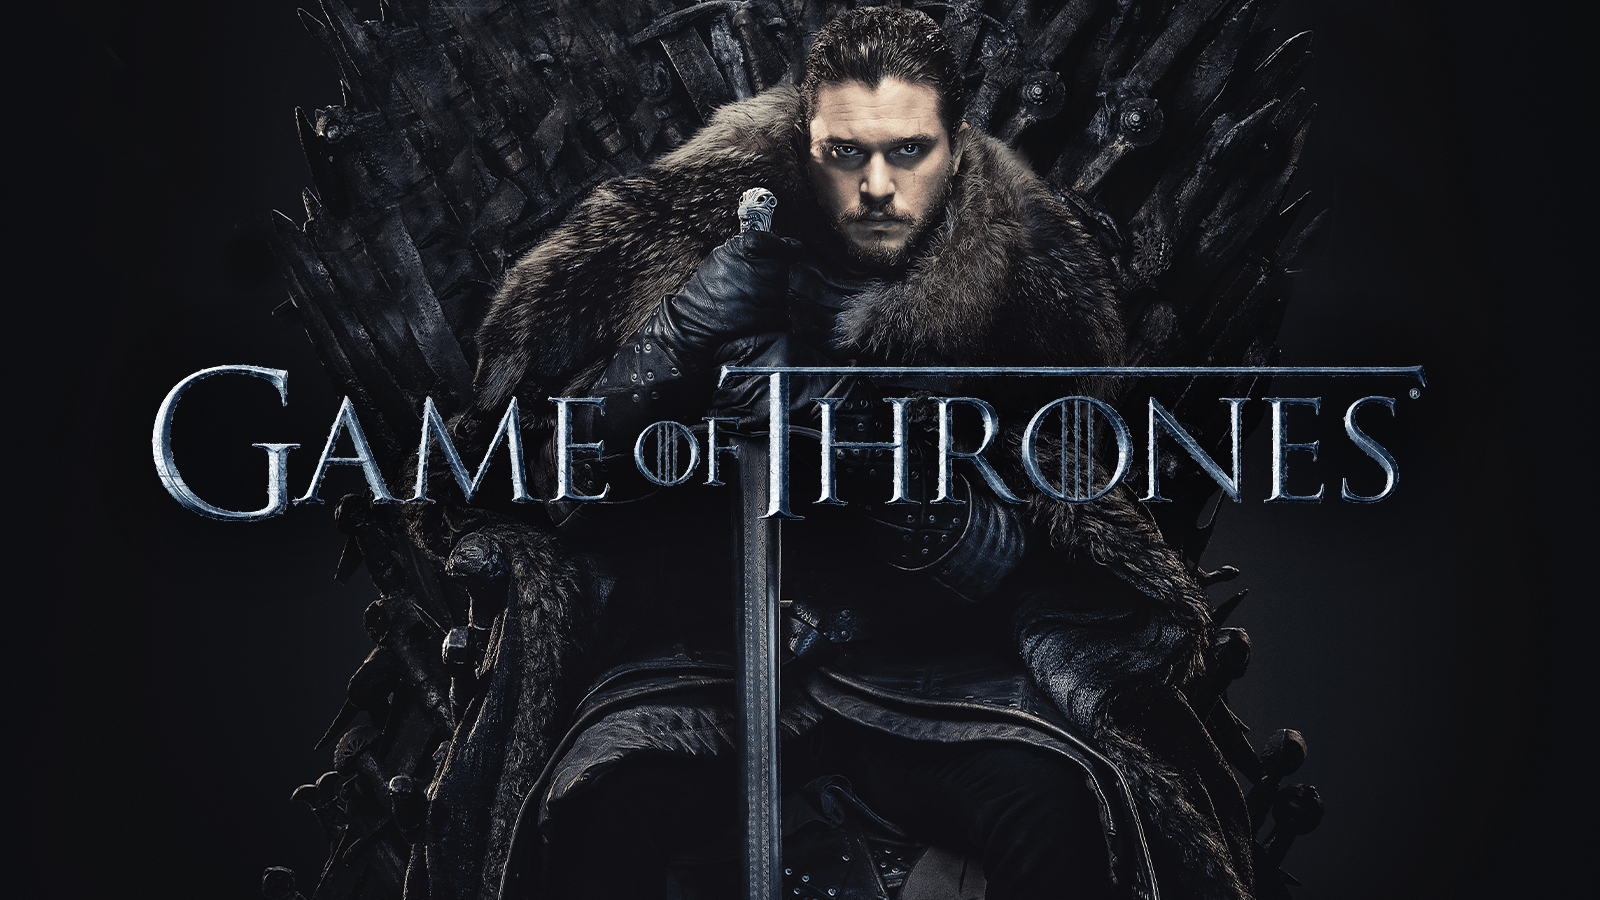 Watch Game of Thrones Season 1 Episode 2 Online - TV Fanatic